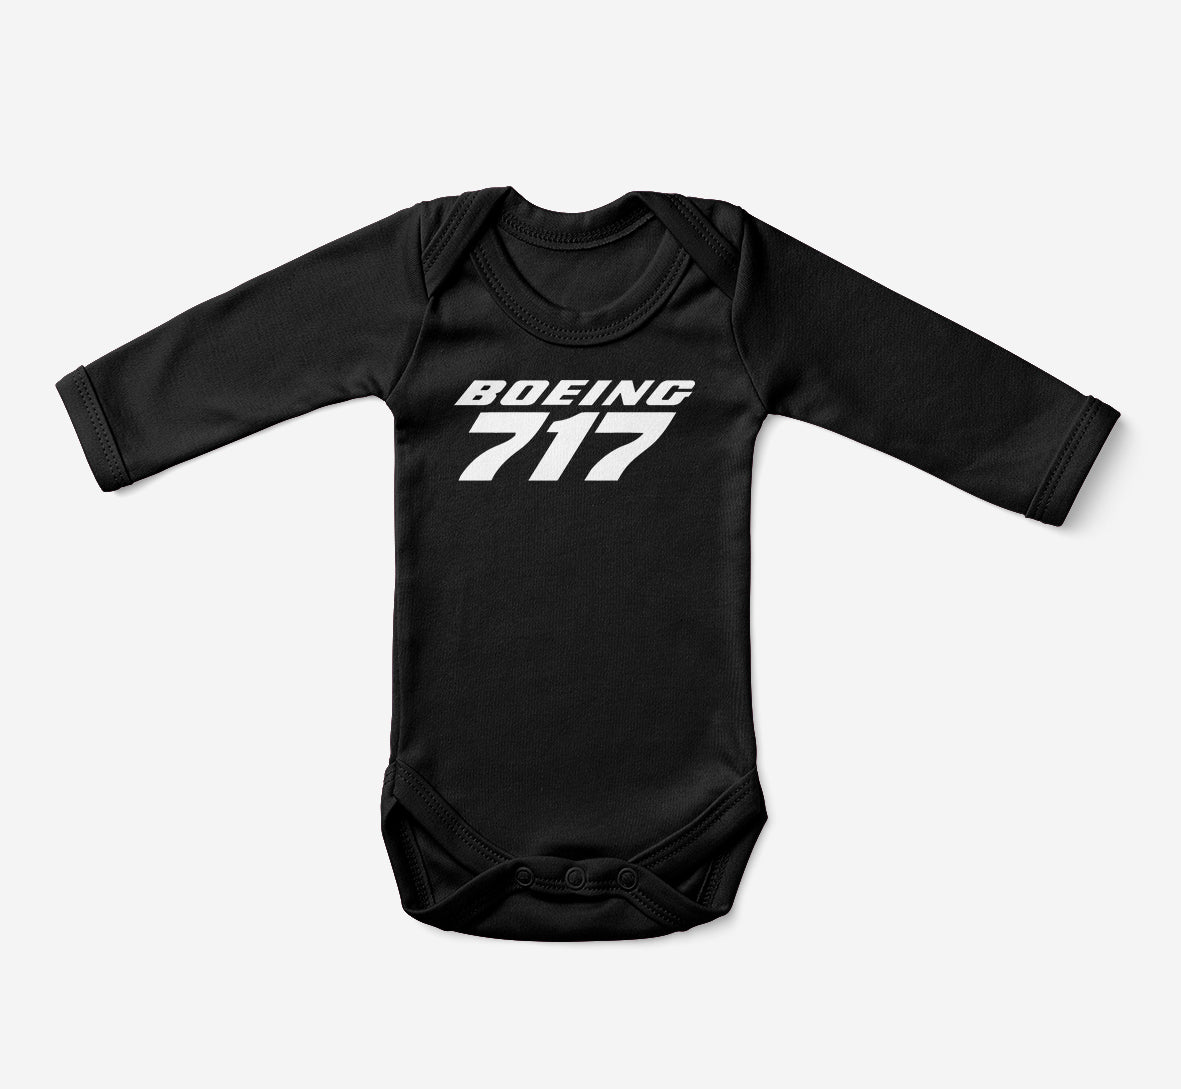 Boeing 717 & Text Designed Baby Bodysuits